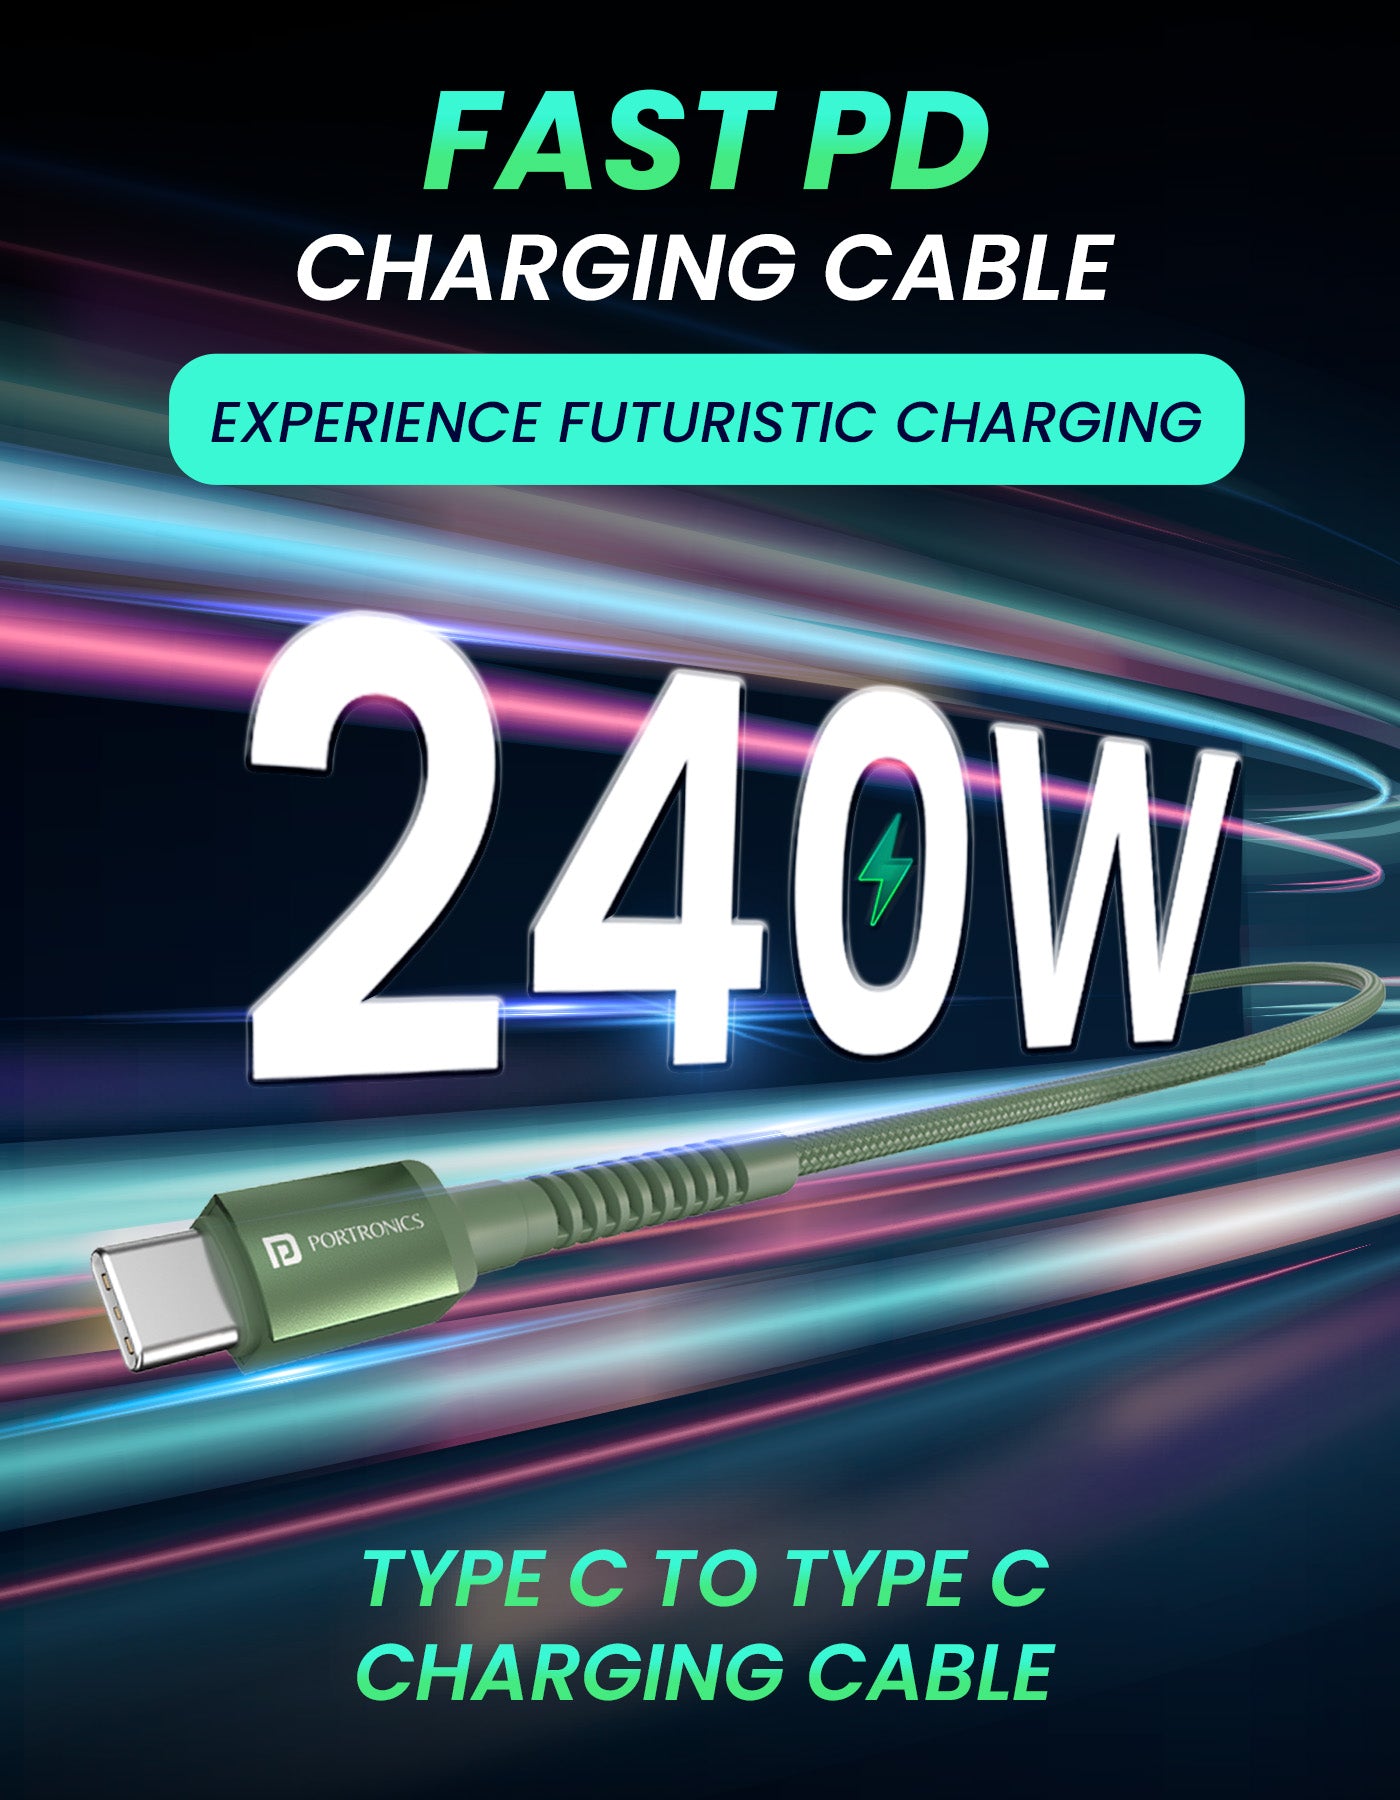 Portronics Konnect B Micro USB Nylon Quick Charging Cable 1meter long